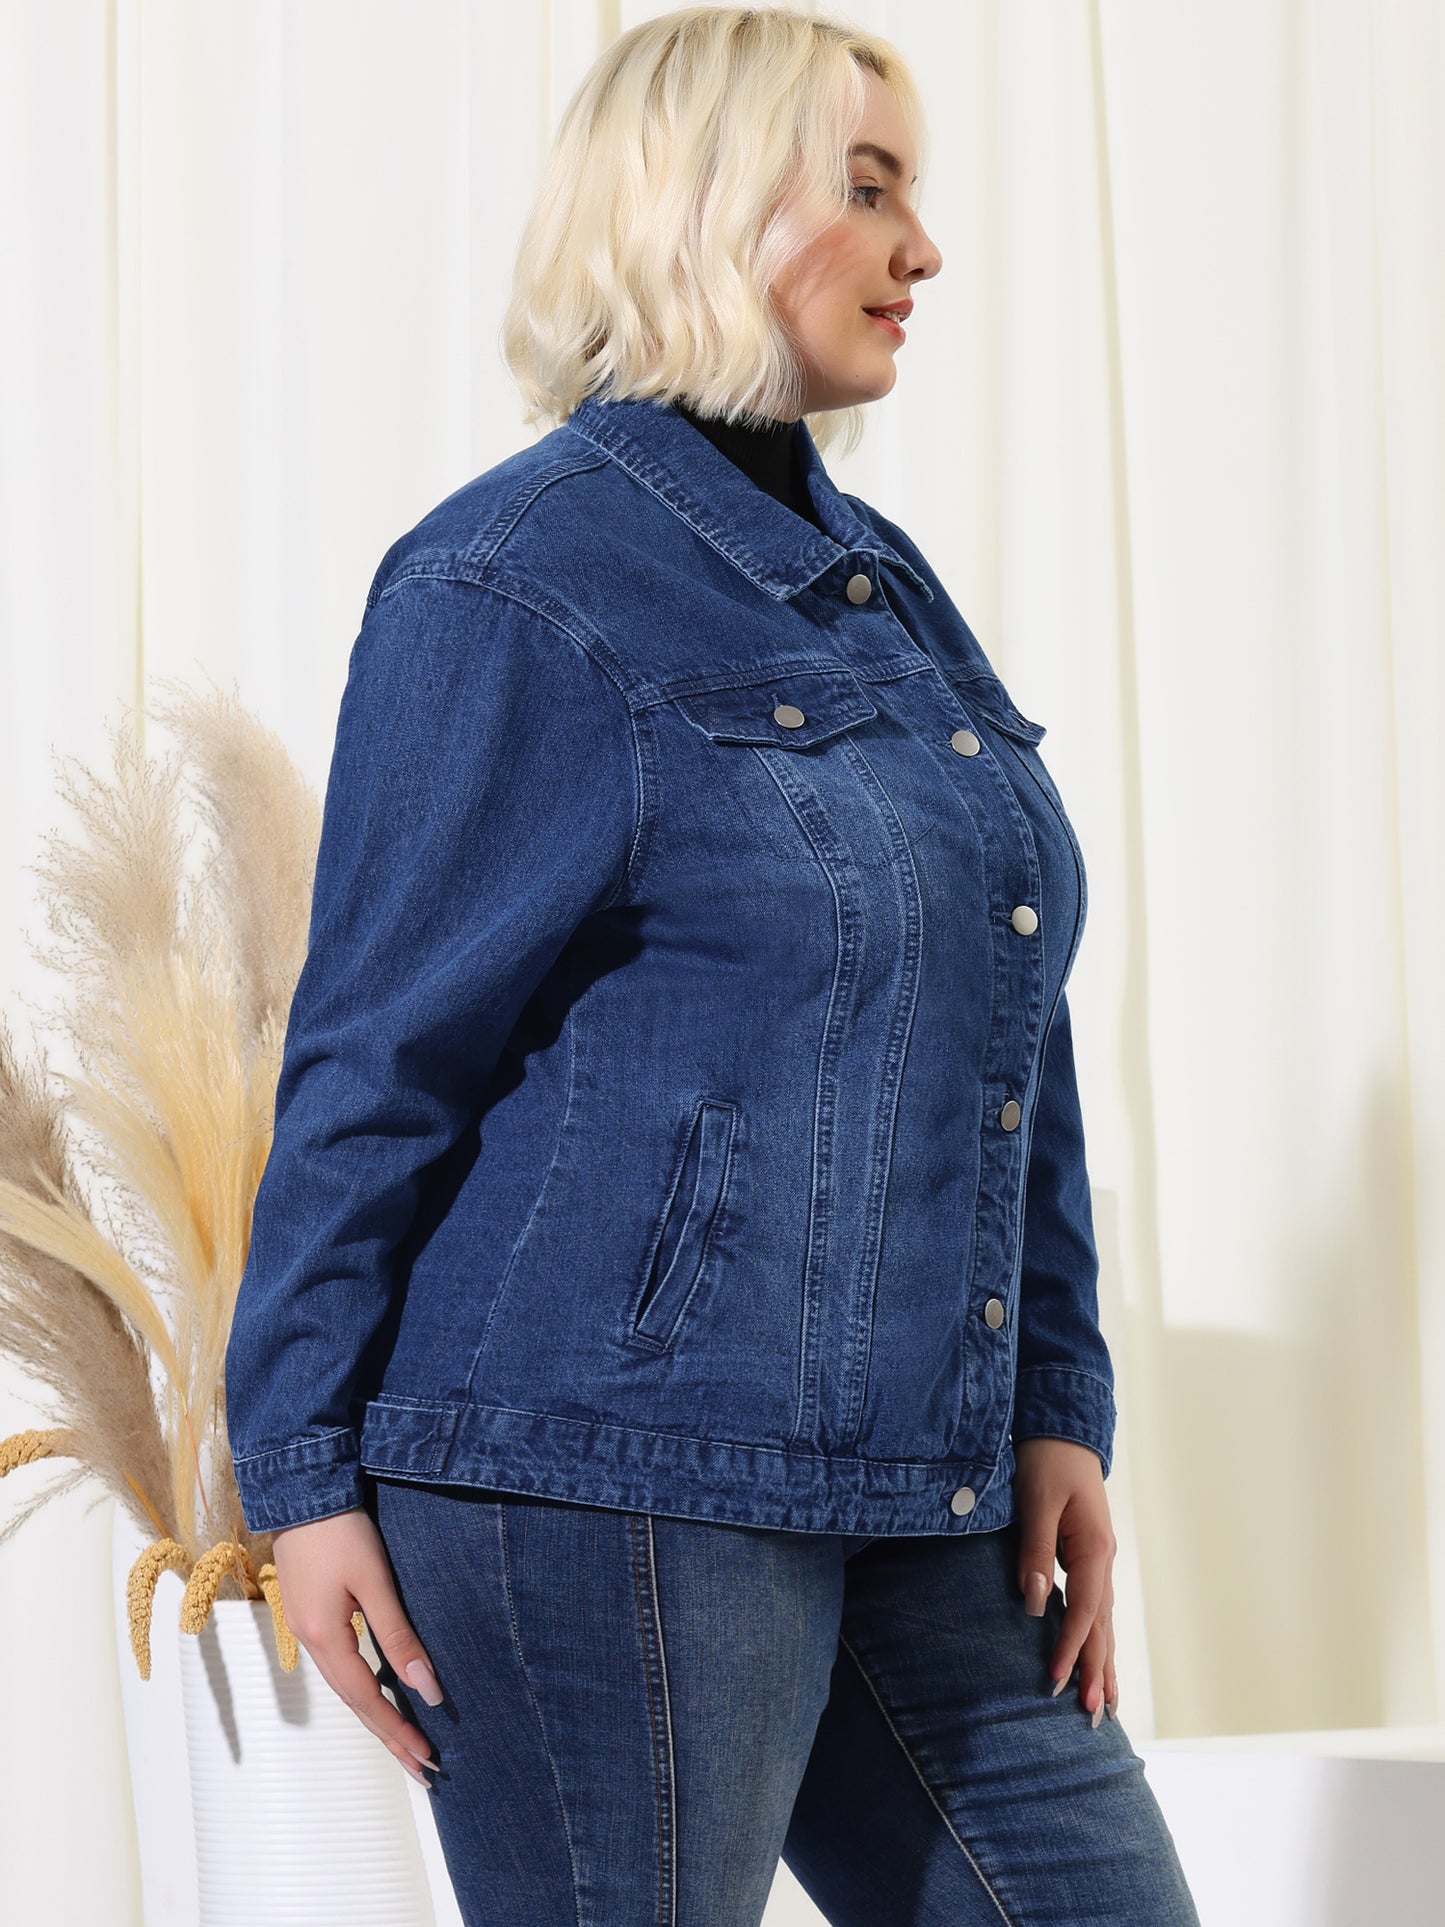 Agnes Orinda Plus Size Stitching Button Front Washed Denim Jacket Mid Blue